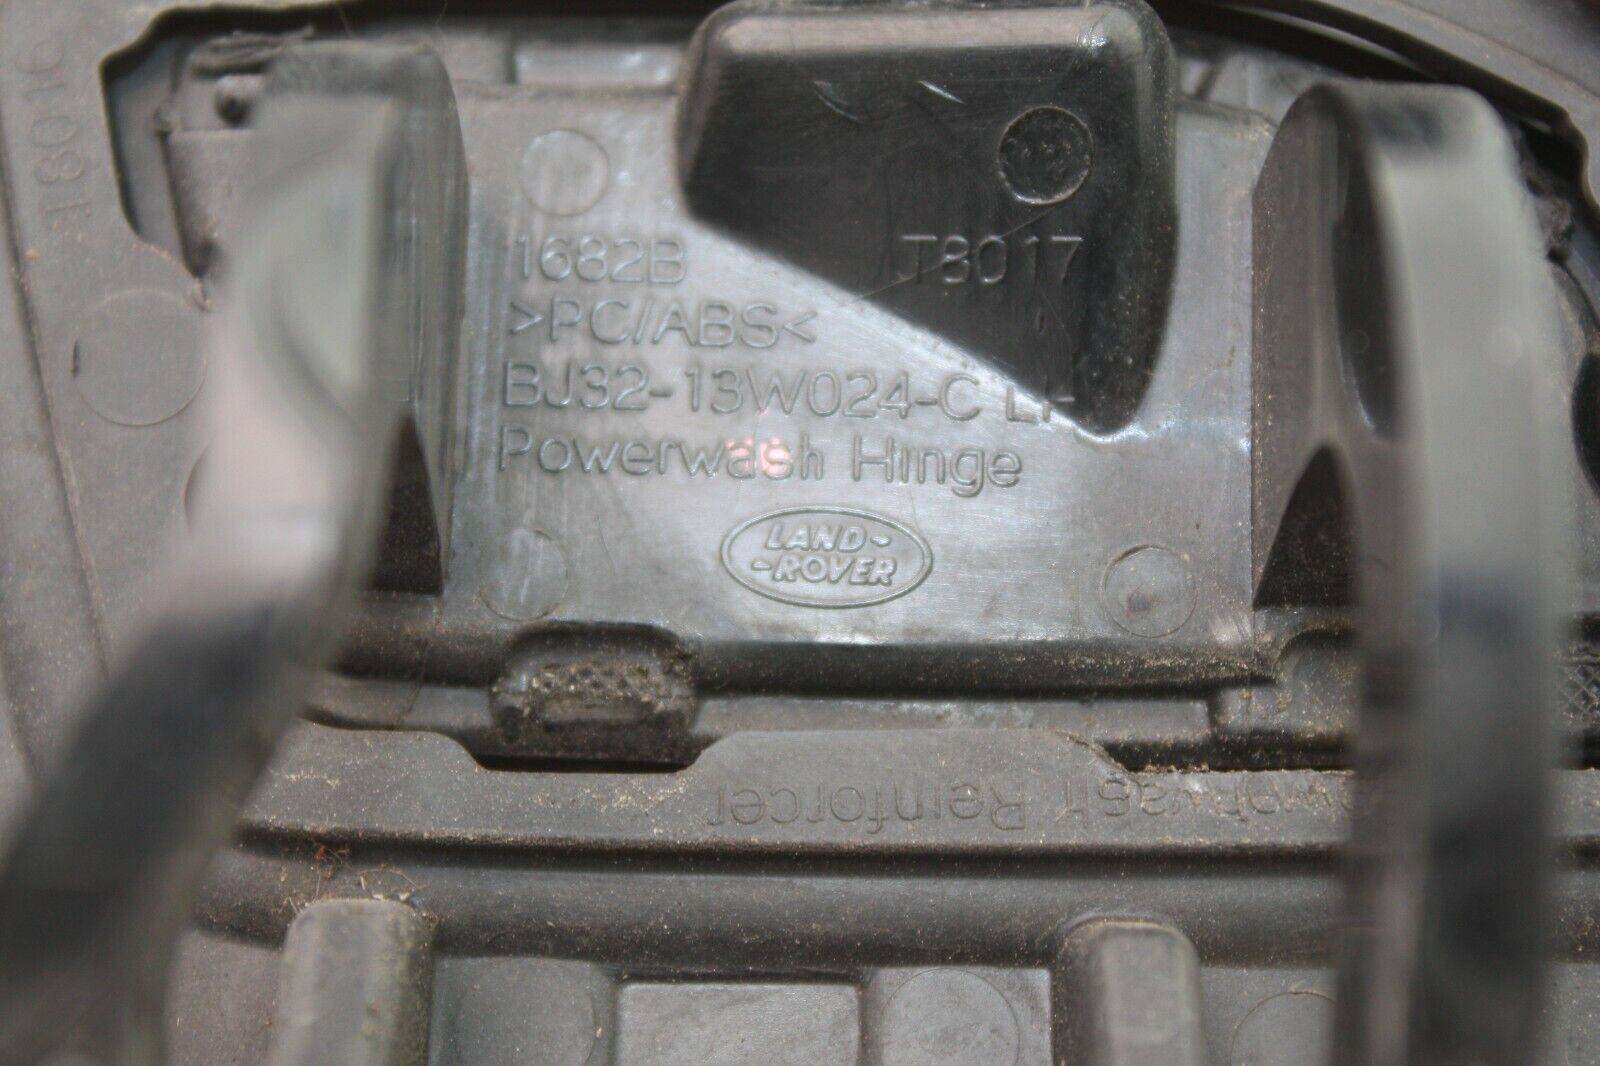 Range-Rover-Evoque-Front-Left-Headlight-Washer-Cover-BJ32-13W024-C-Genuine-175864962676-5